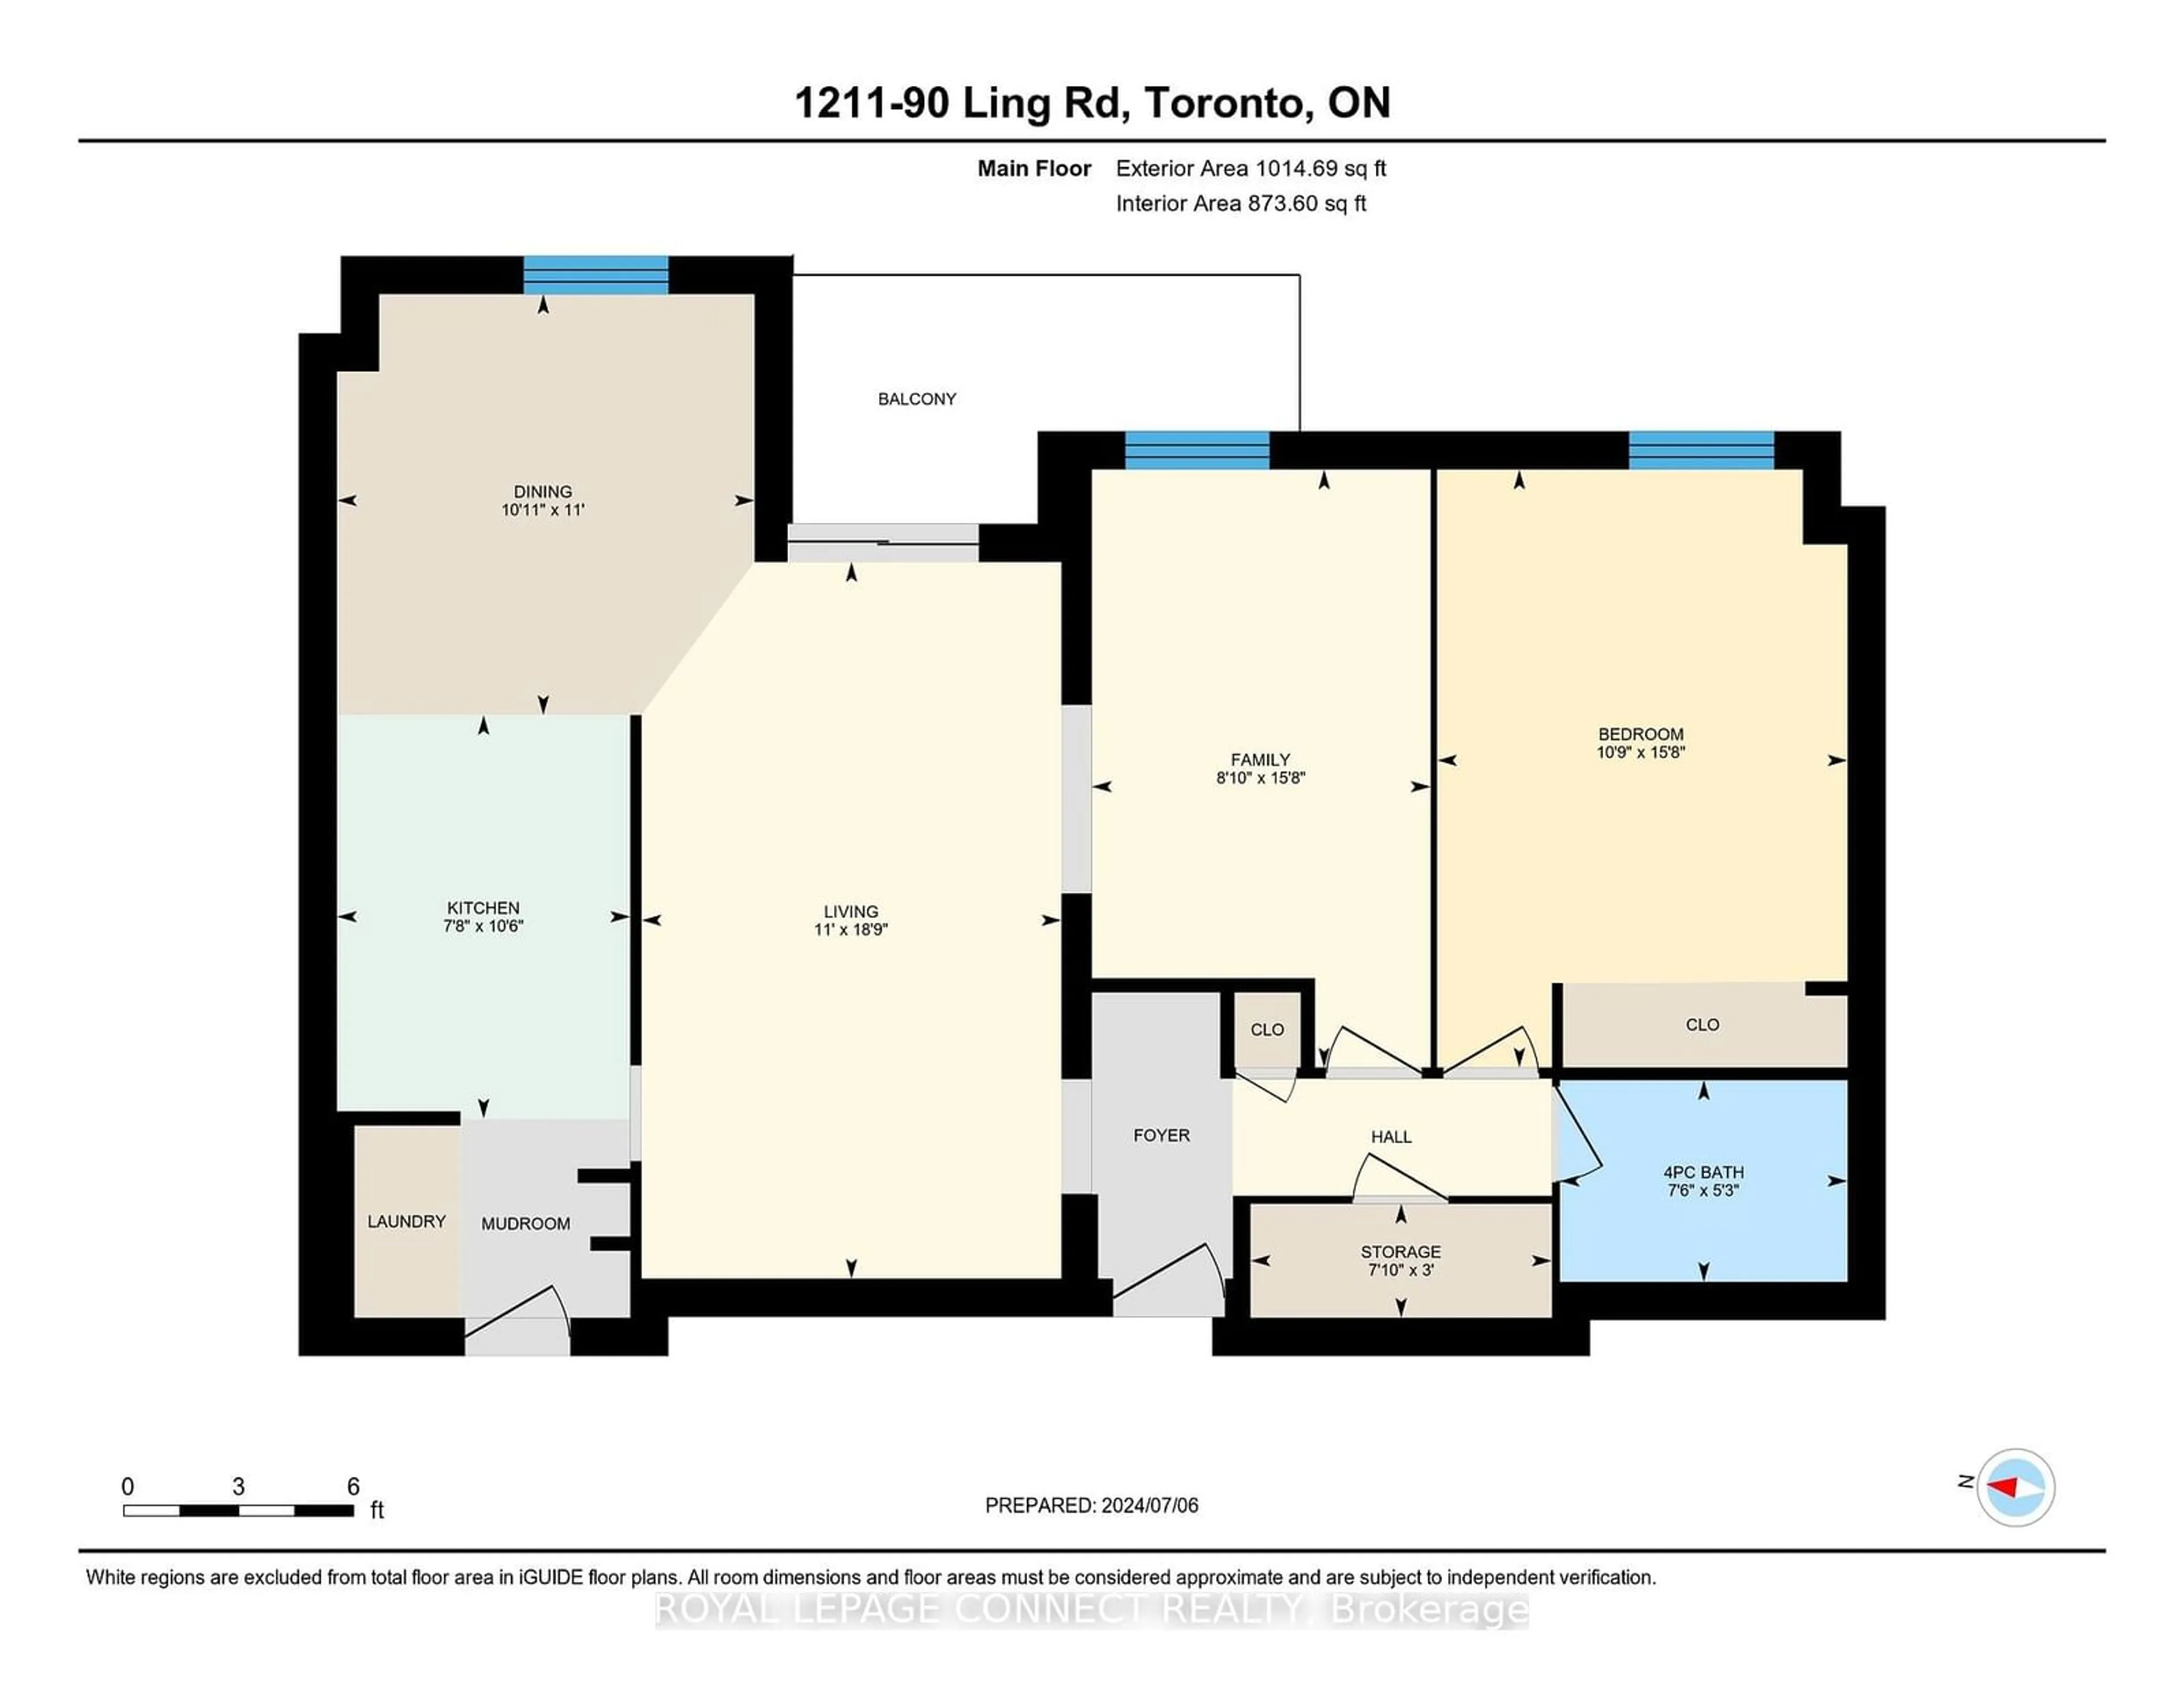 Floor plan for 90 Ling Rd #1211, Toronto Ontario M1E 4Y3